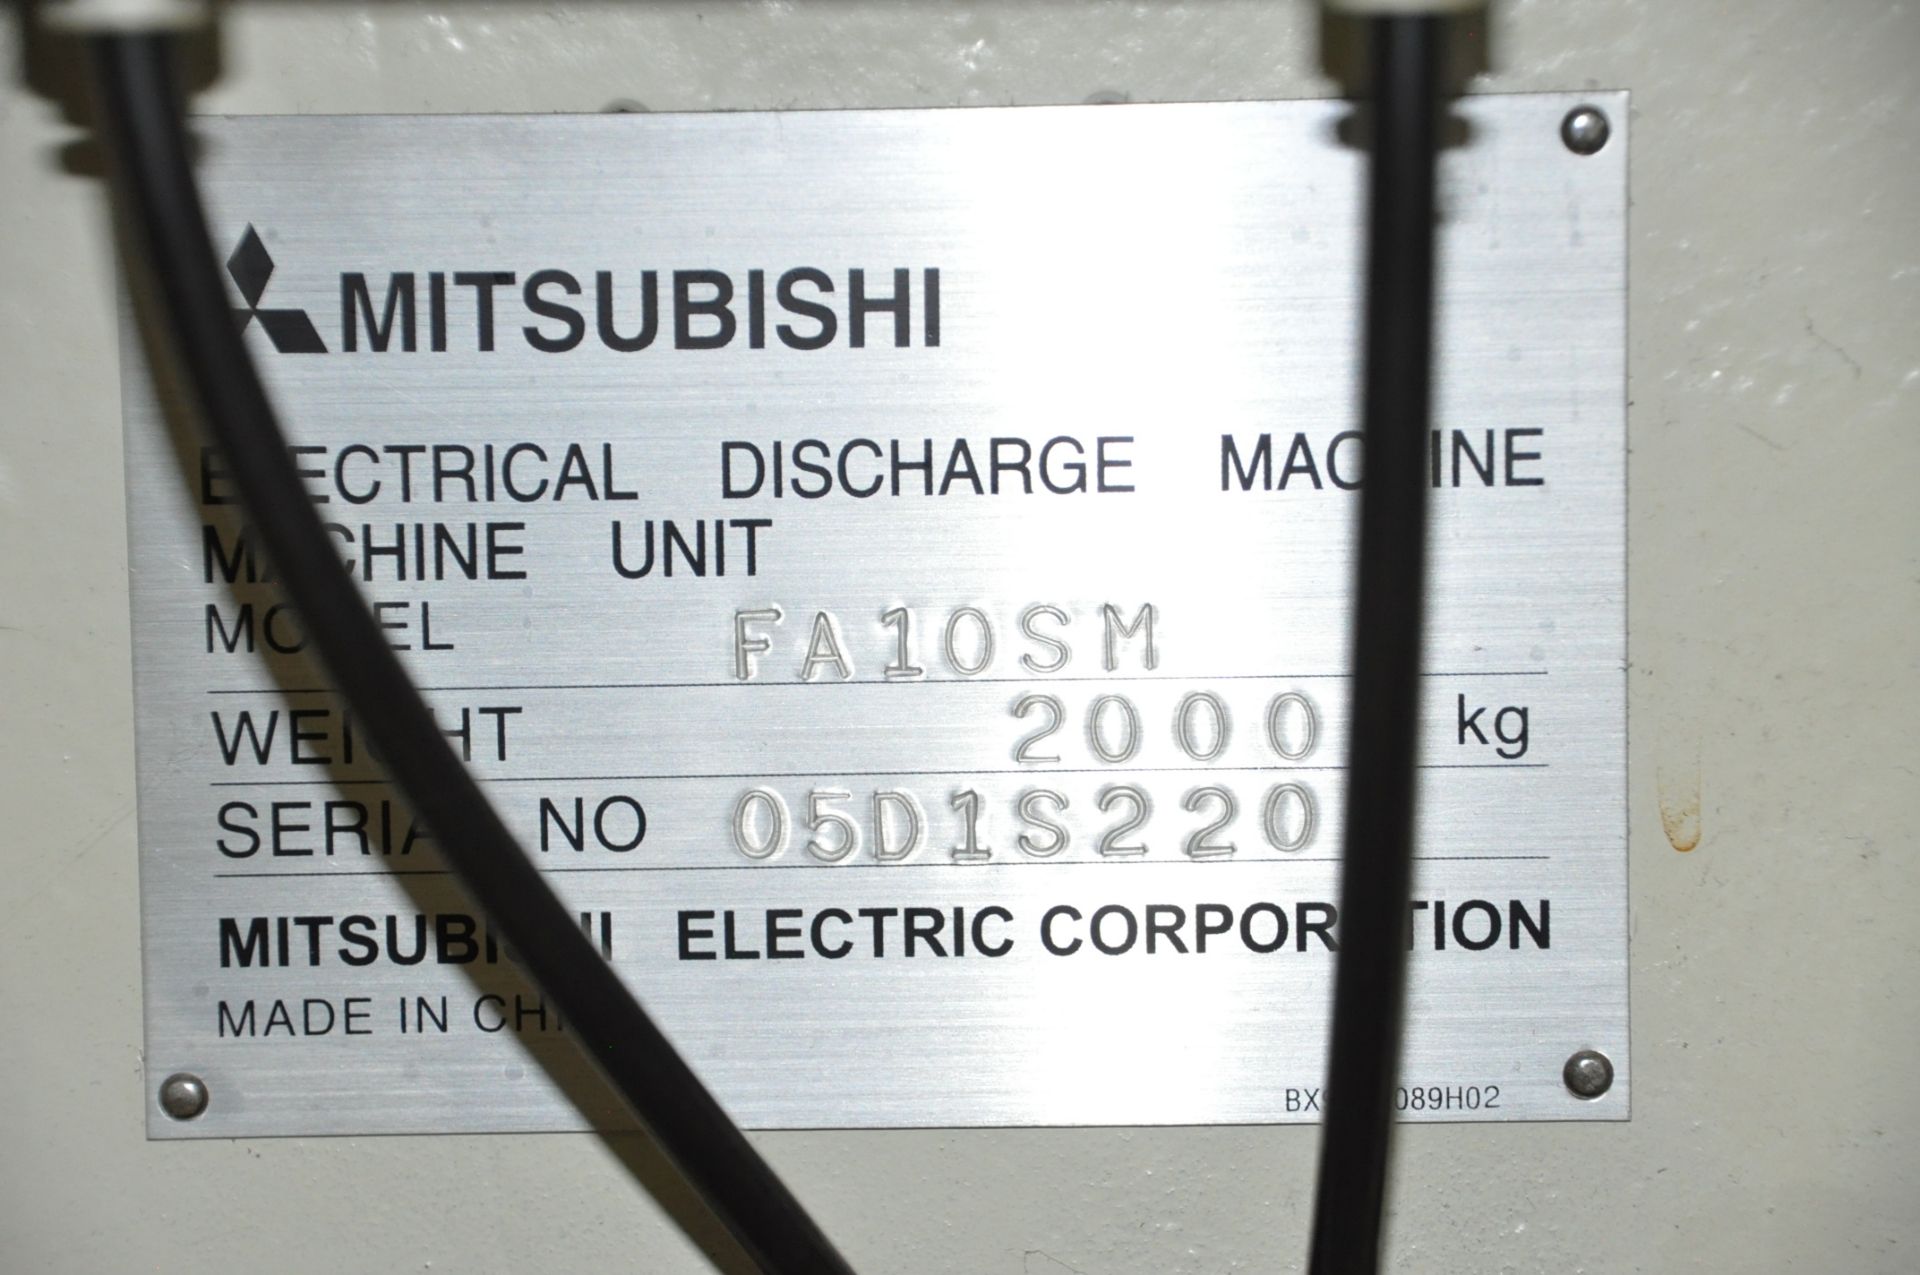 Mitsubishi Model FA10-SM CNC Wire EDM, s/n O5D1S220, New2004, Mitsubishi W21FAS-2 CNC Control, 5- - Image 11 of 11